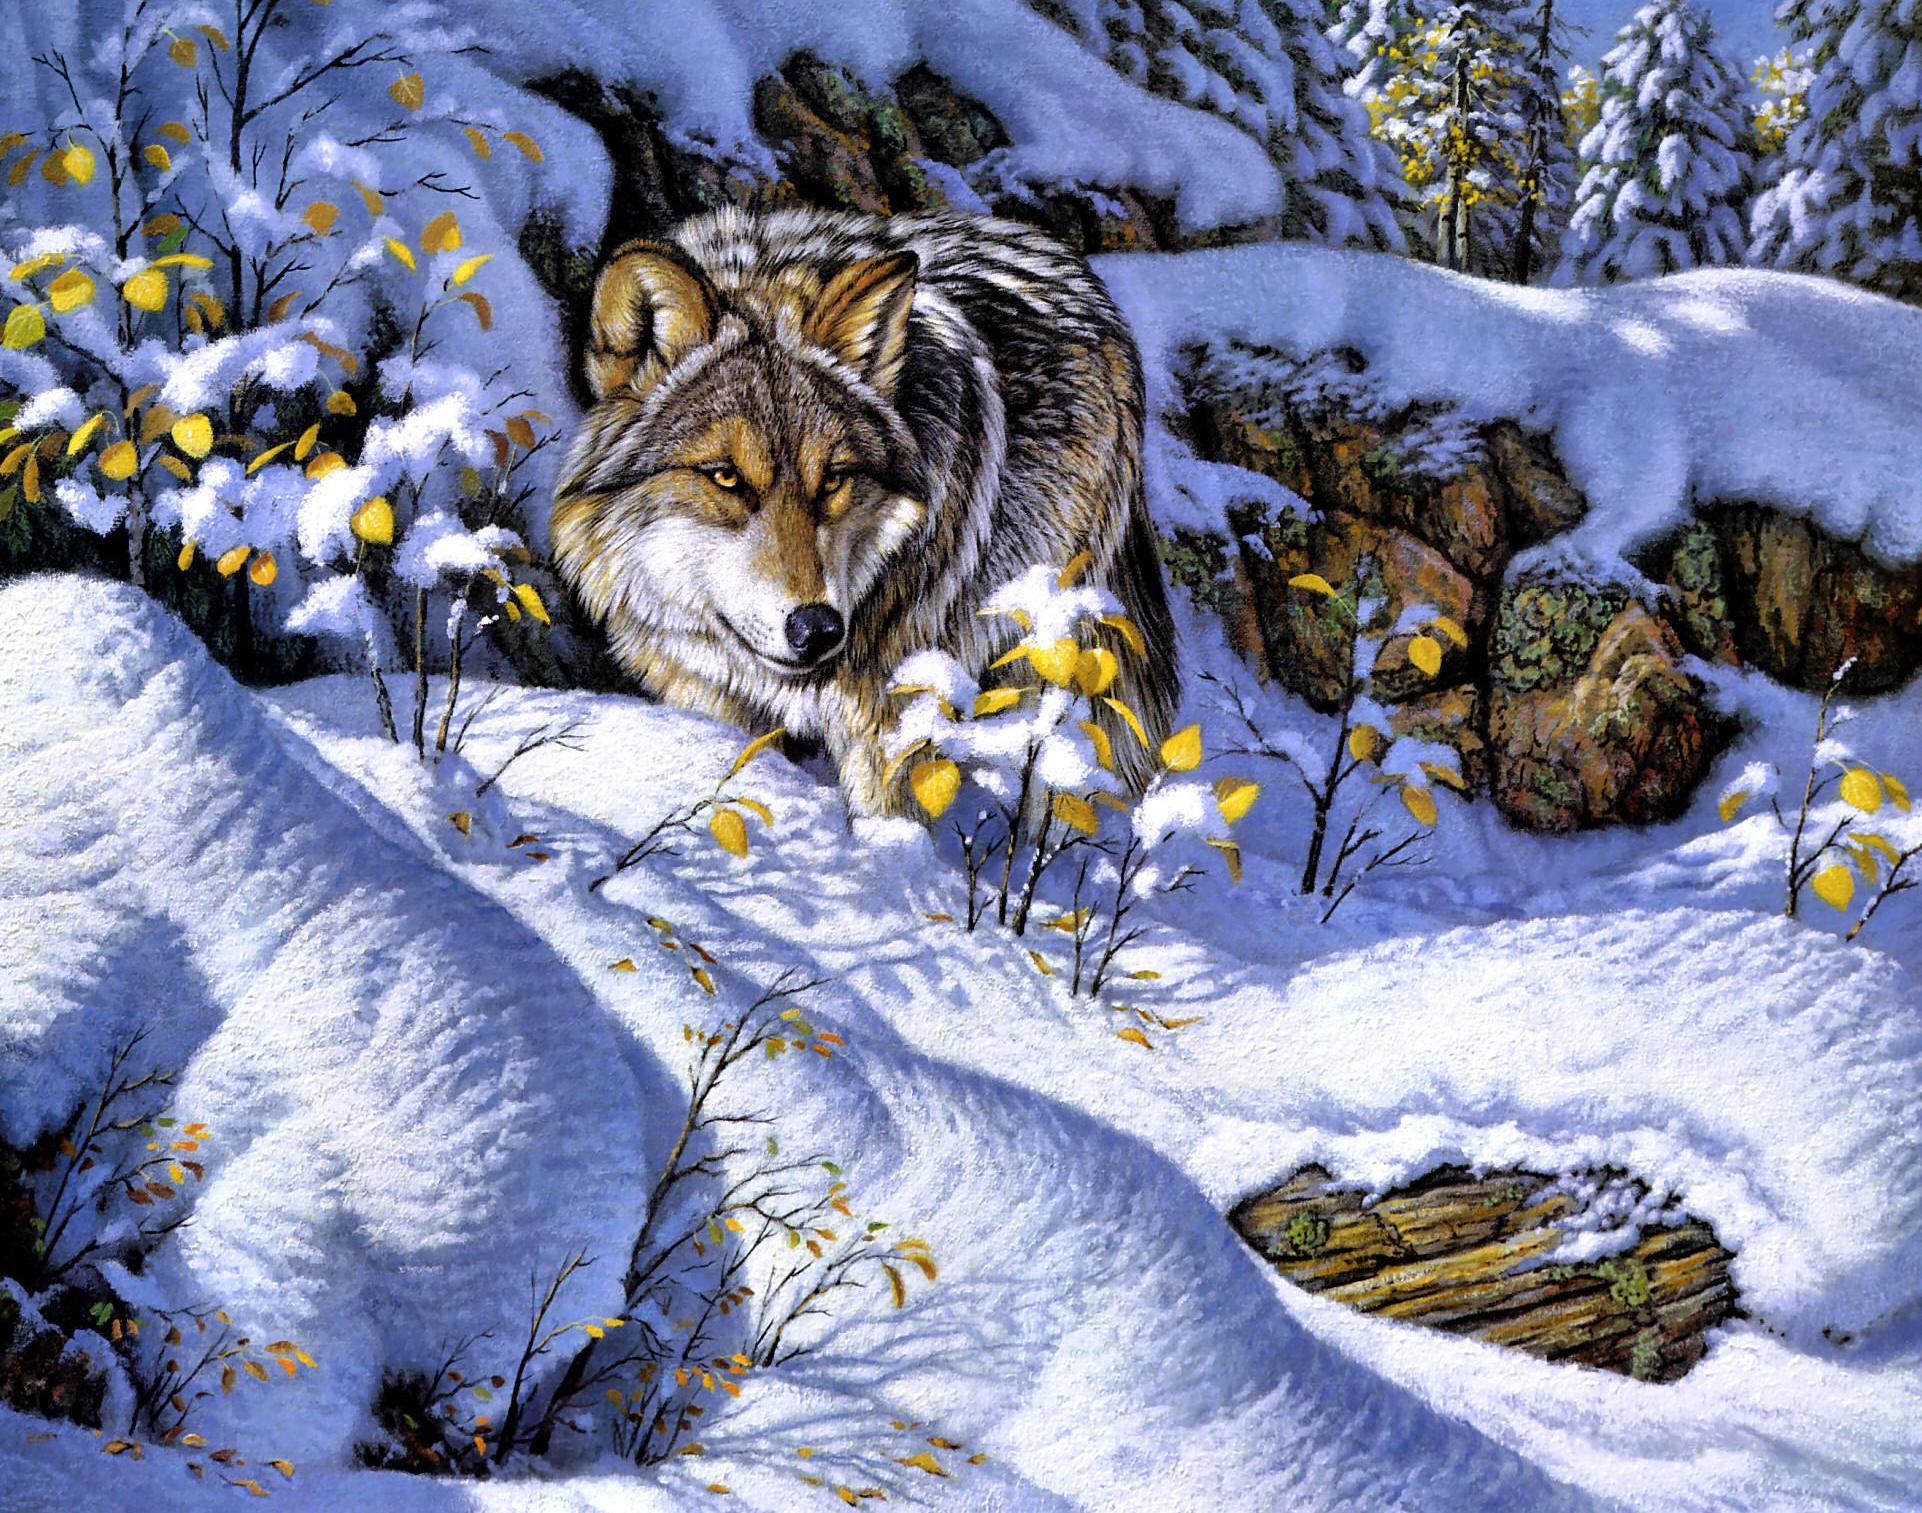 Descarga gratuita de fondo de pantalla para móvil de Wolves, Lobo, Animales.